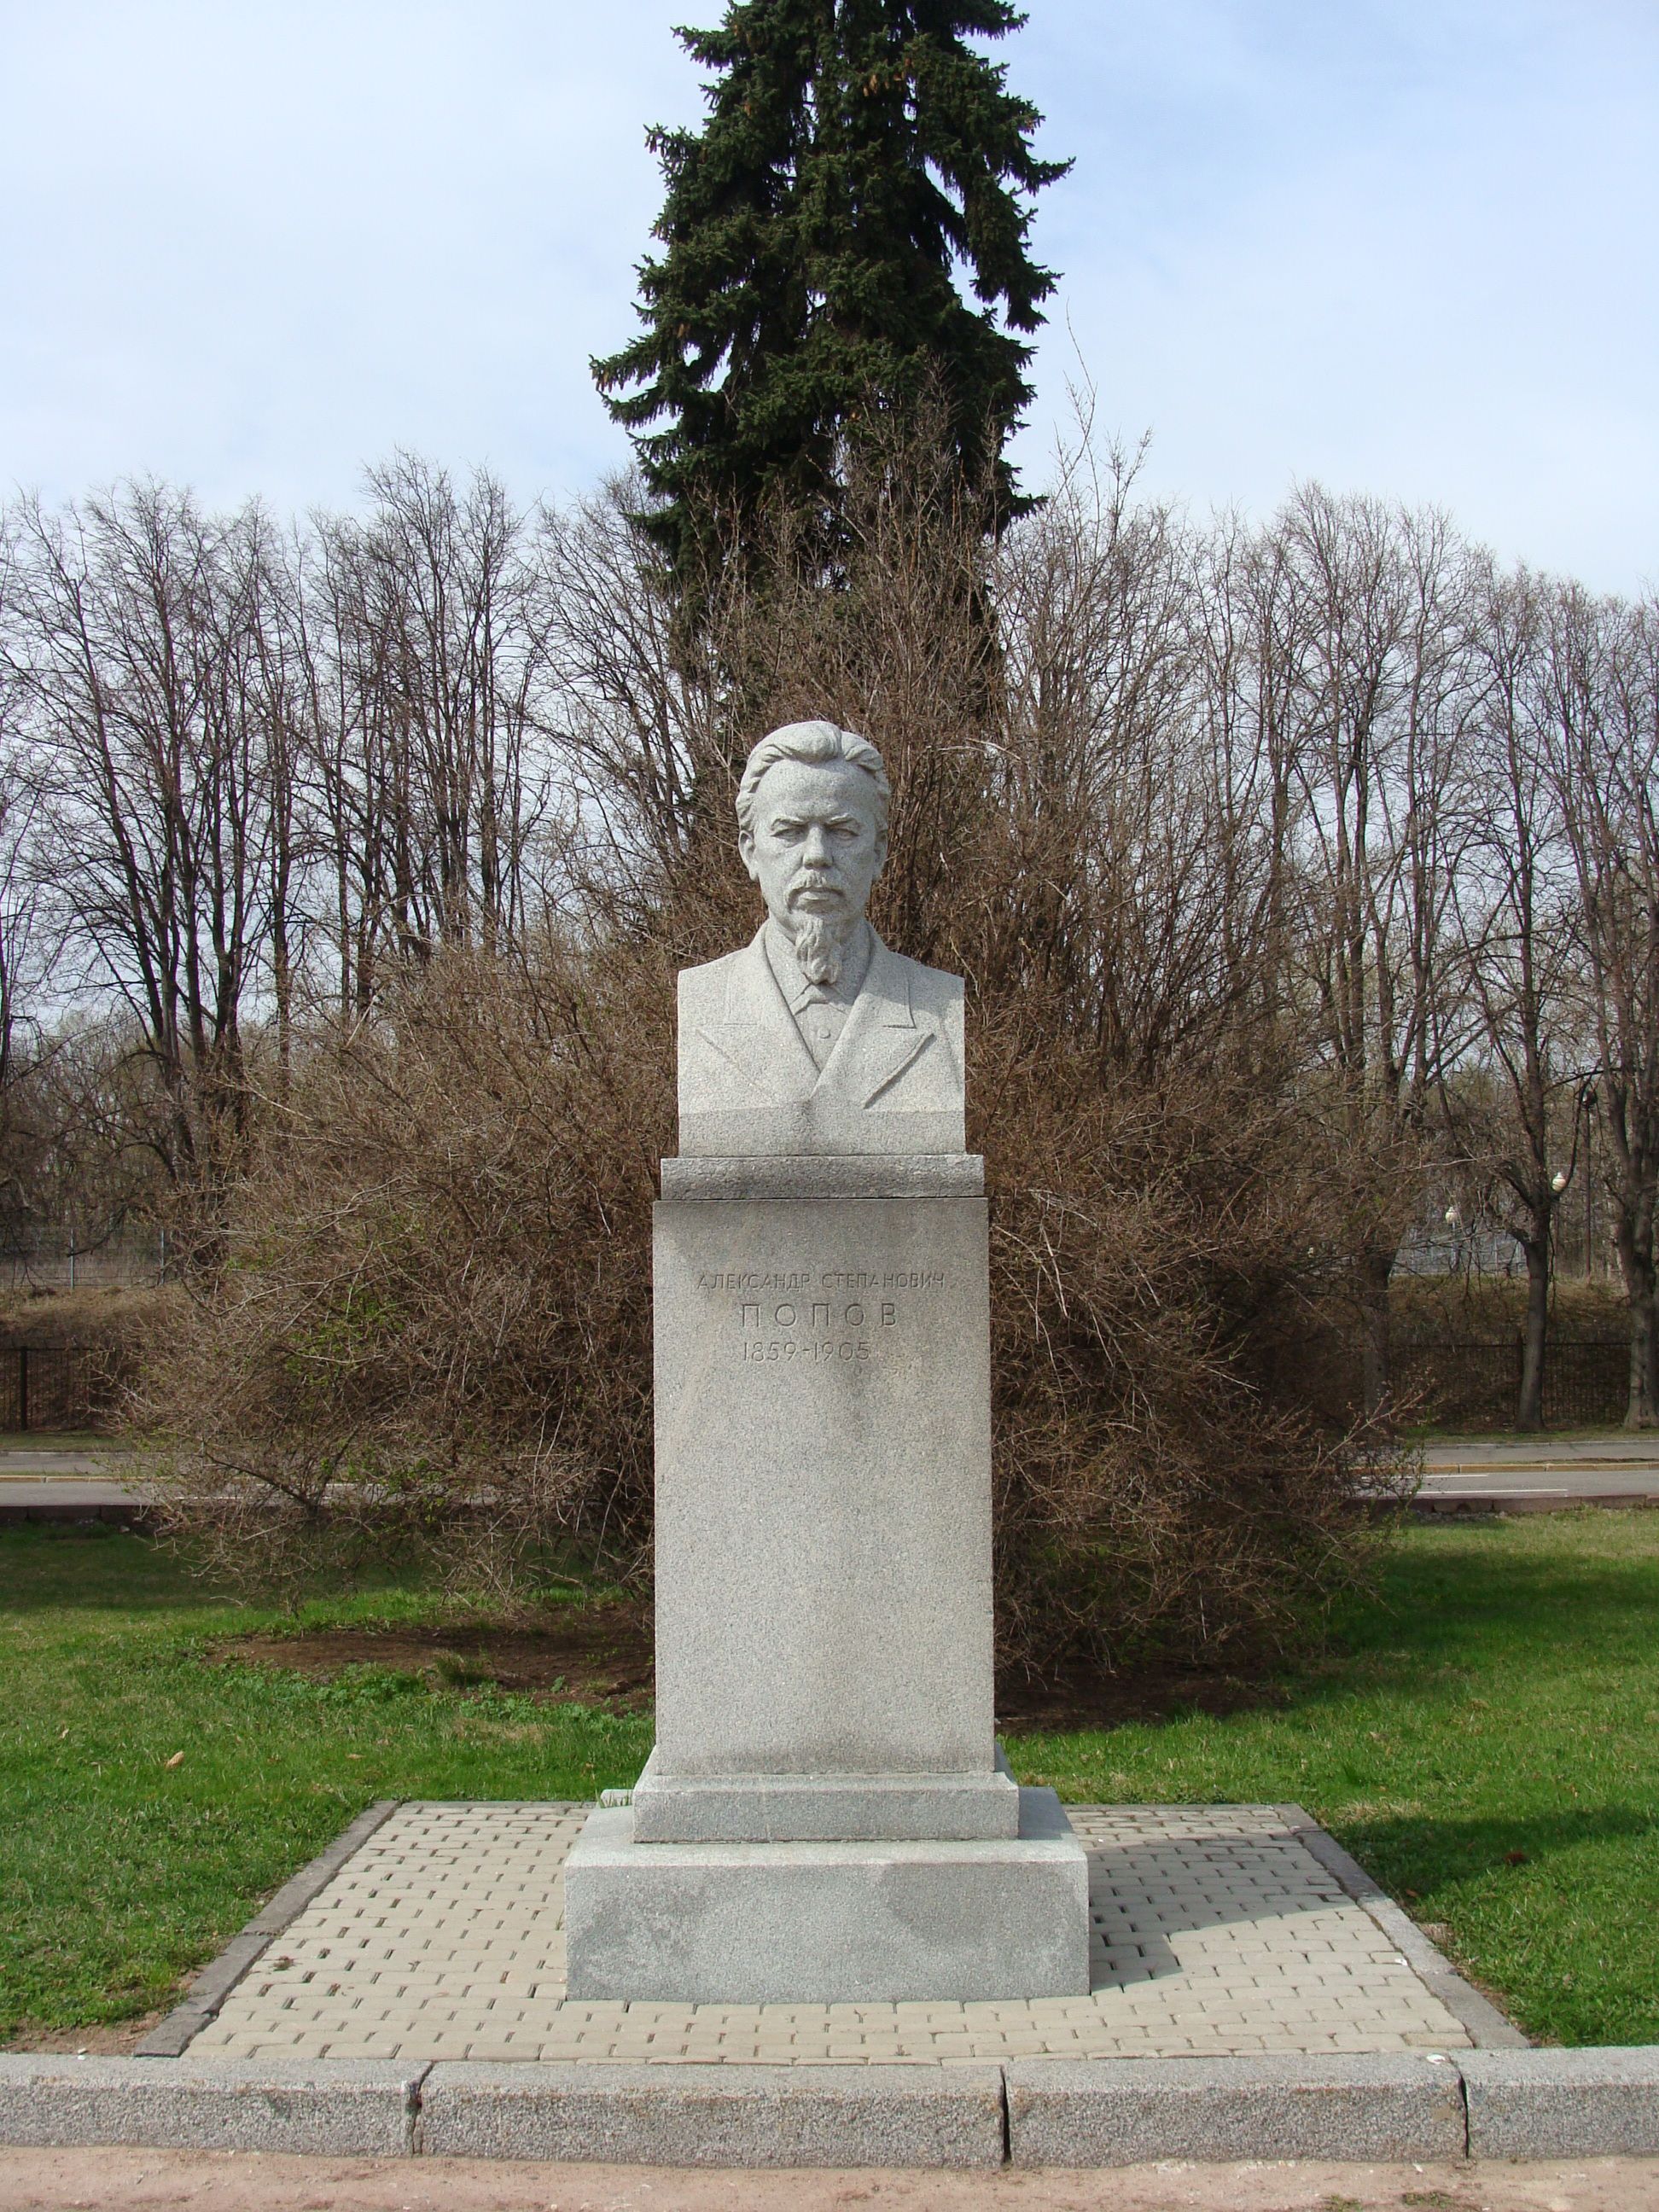 Monument to Alexander Stepanovich Popov, physicist - Moscow